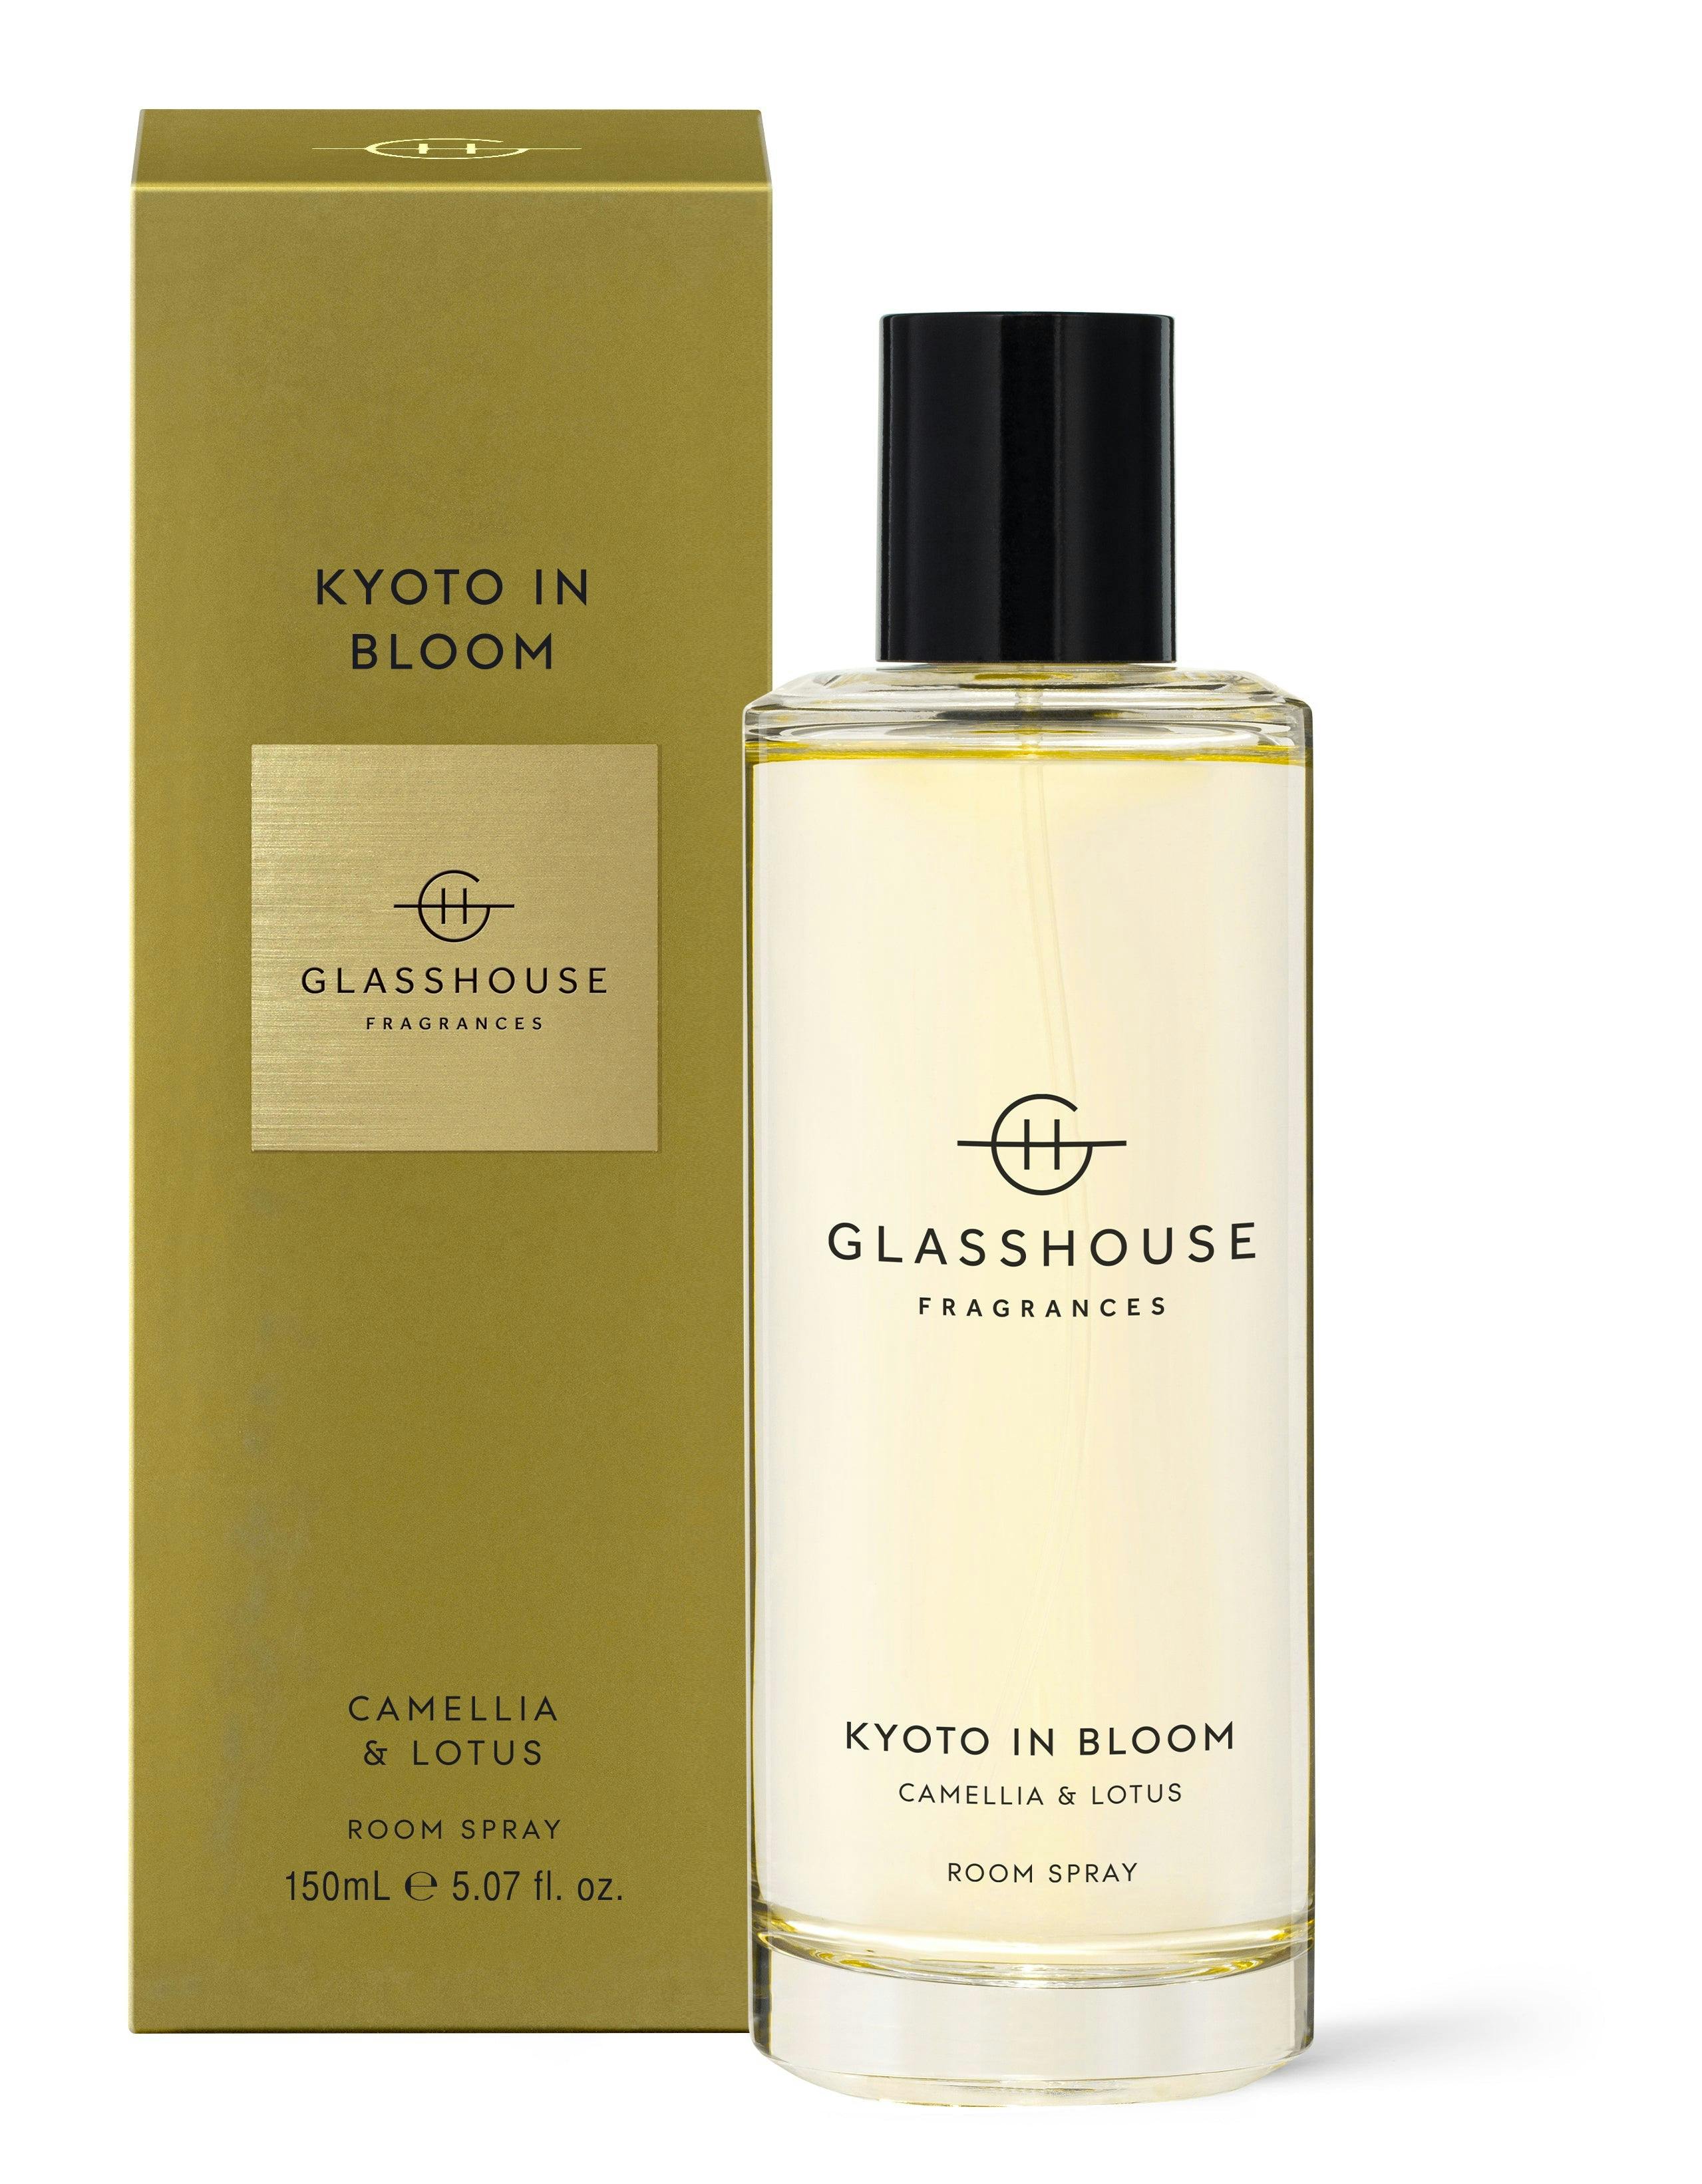 Glasshouse Fragrances Interior Fragrance 150ml - KYOTO IN BLOOM